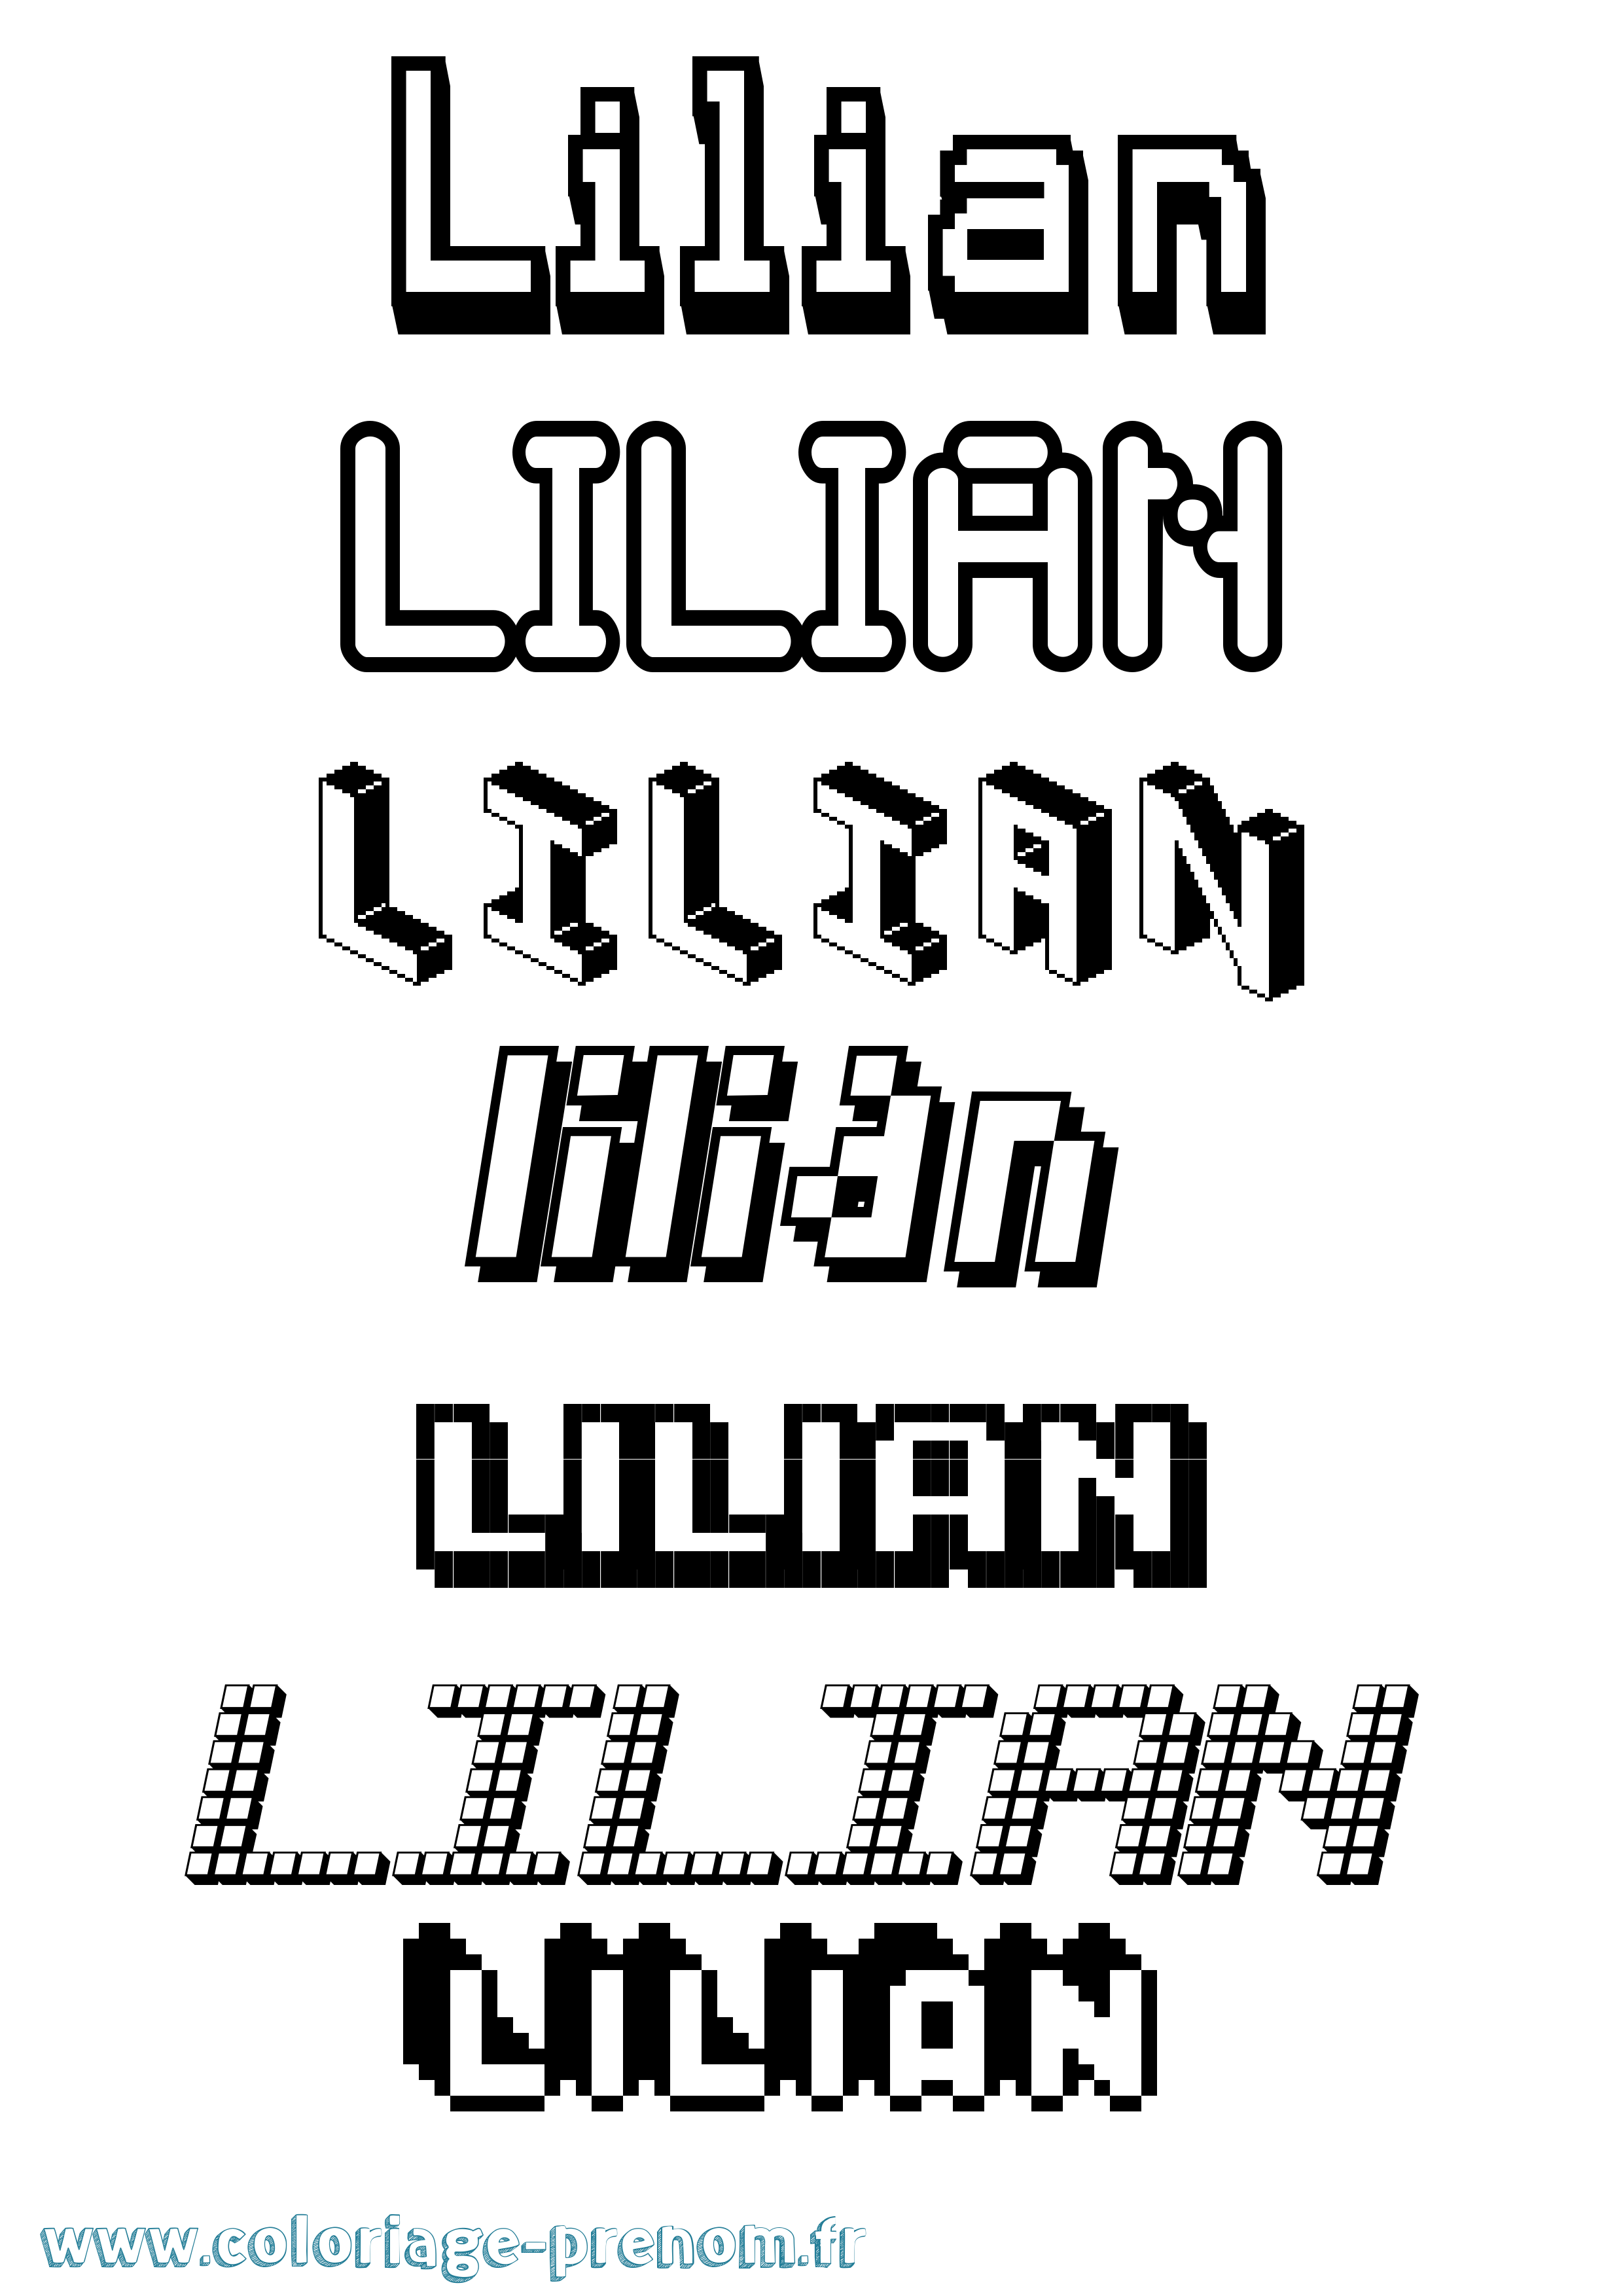 Coloriage prénom Lilian Pixel